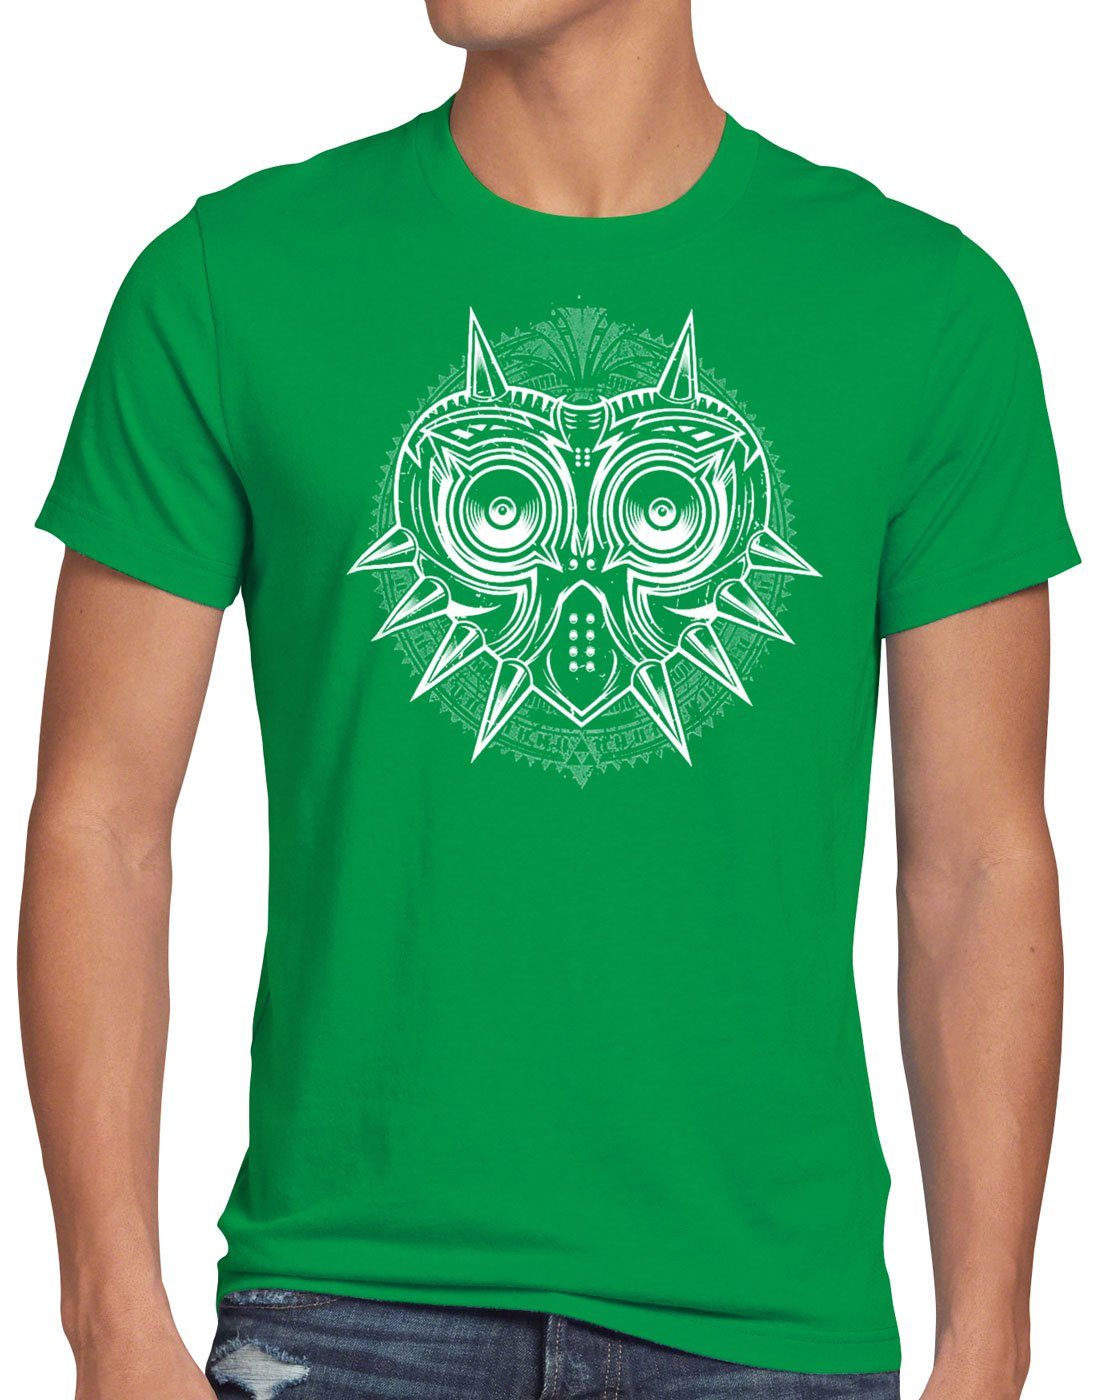 Majora’s n64 Herren style3 T-Shirt lite link Mask grün Print-Shirt ocarina switch